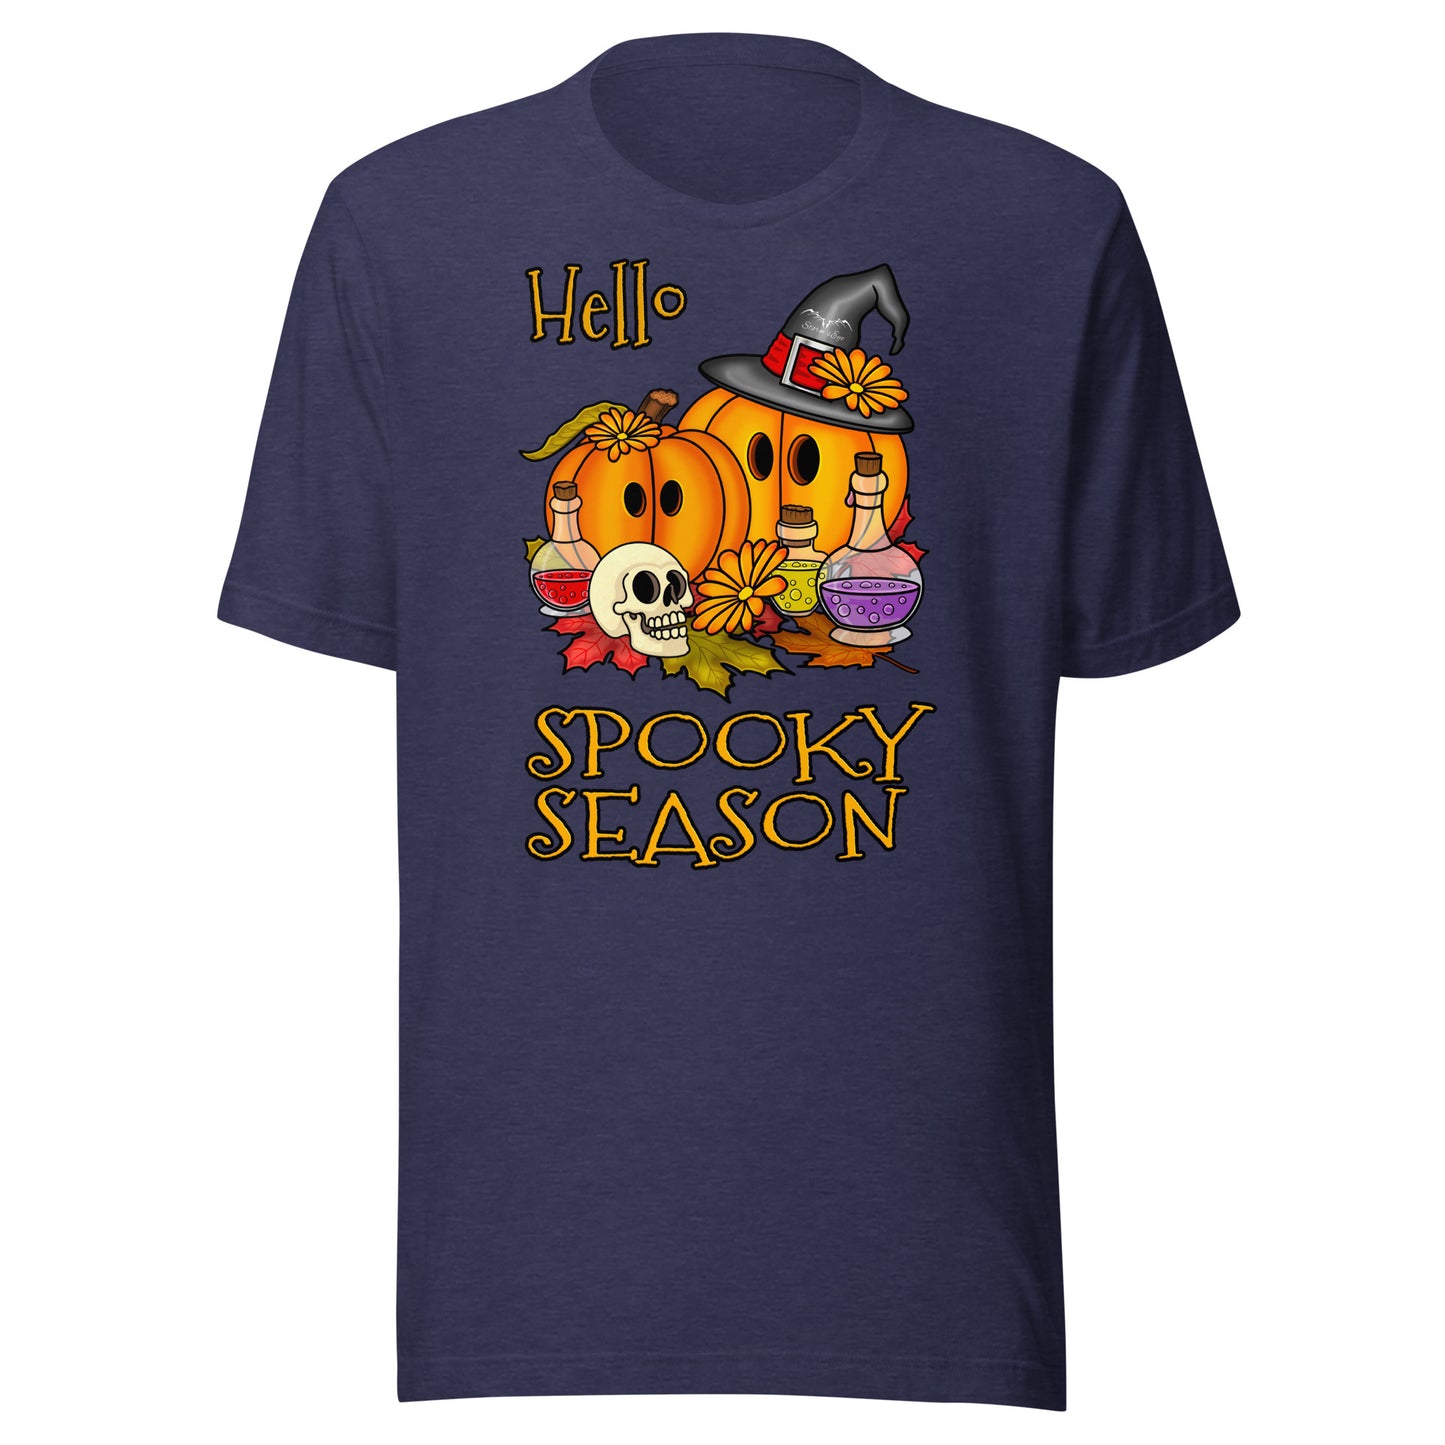 stormseye design hello spooky season halloween T shirt flat view navy blue